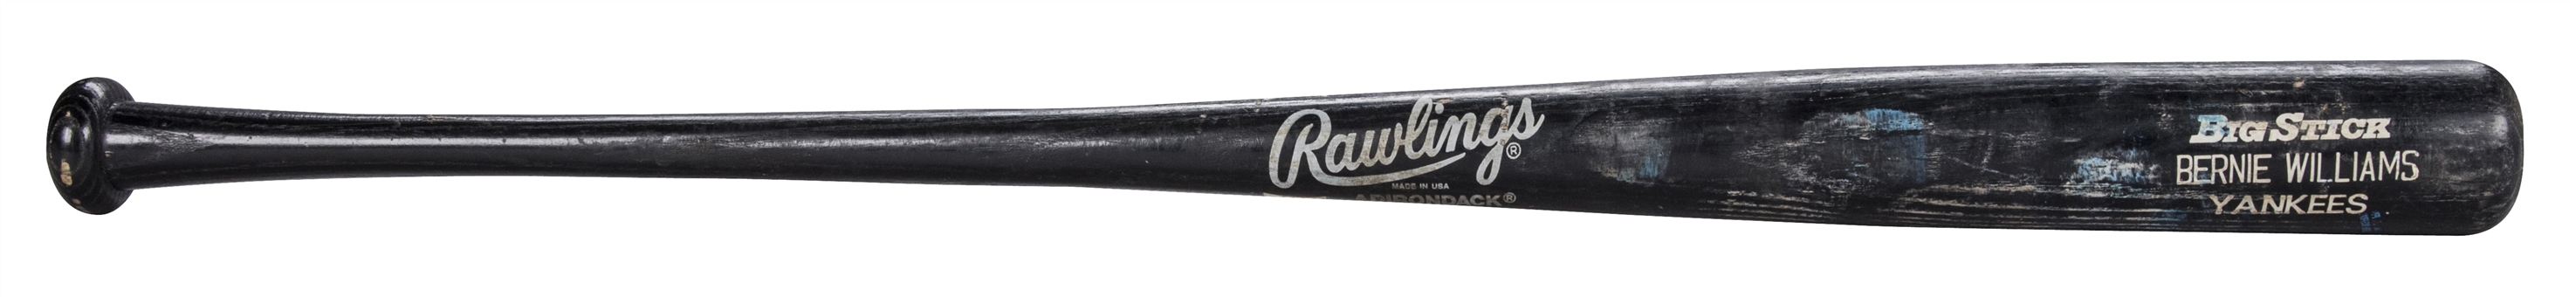 1995 Bernie Williams Game Used Rawlings Big Stick Bat (PSA/DNA GU 10)